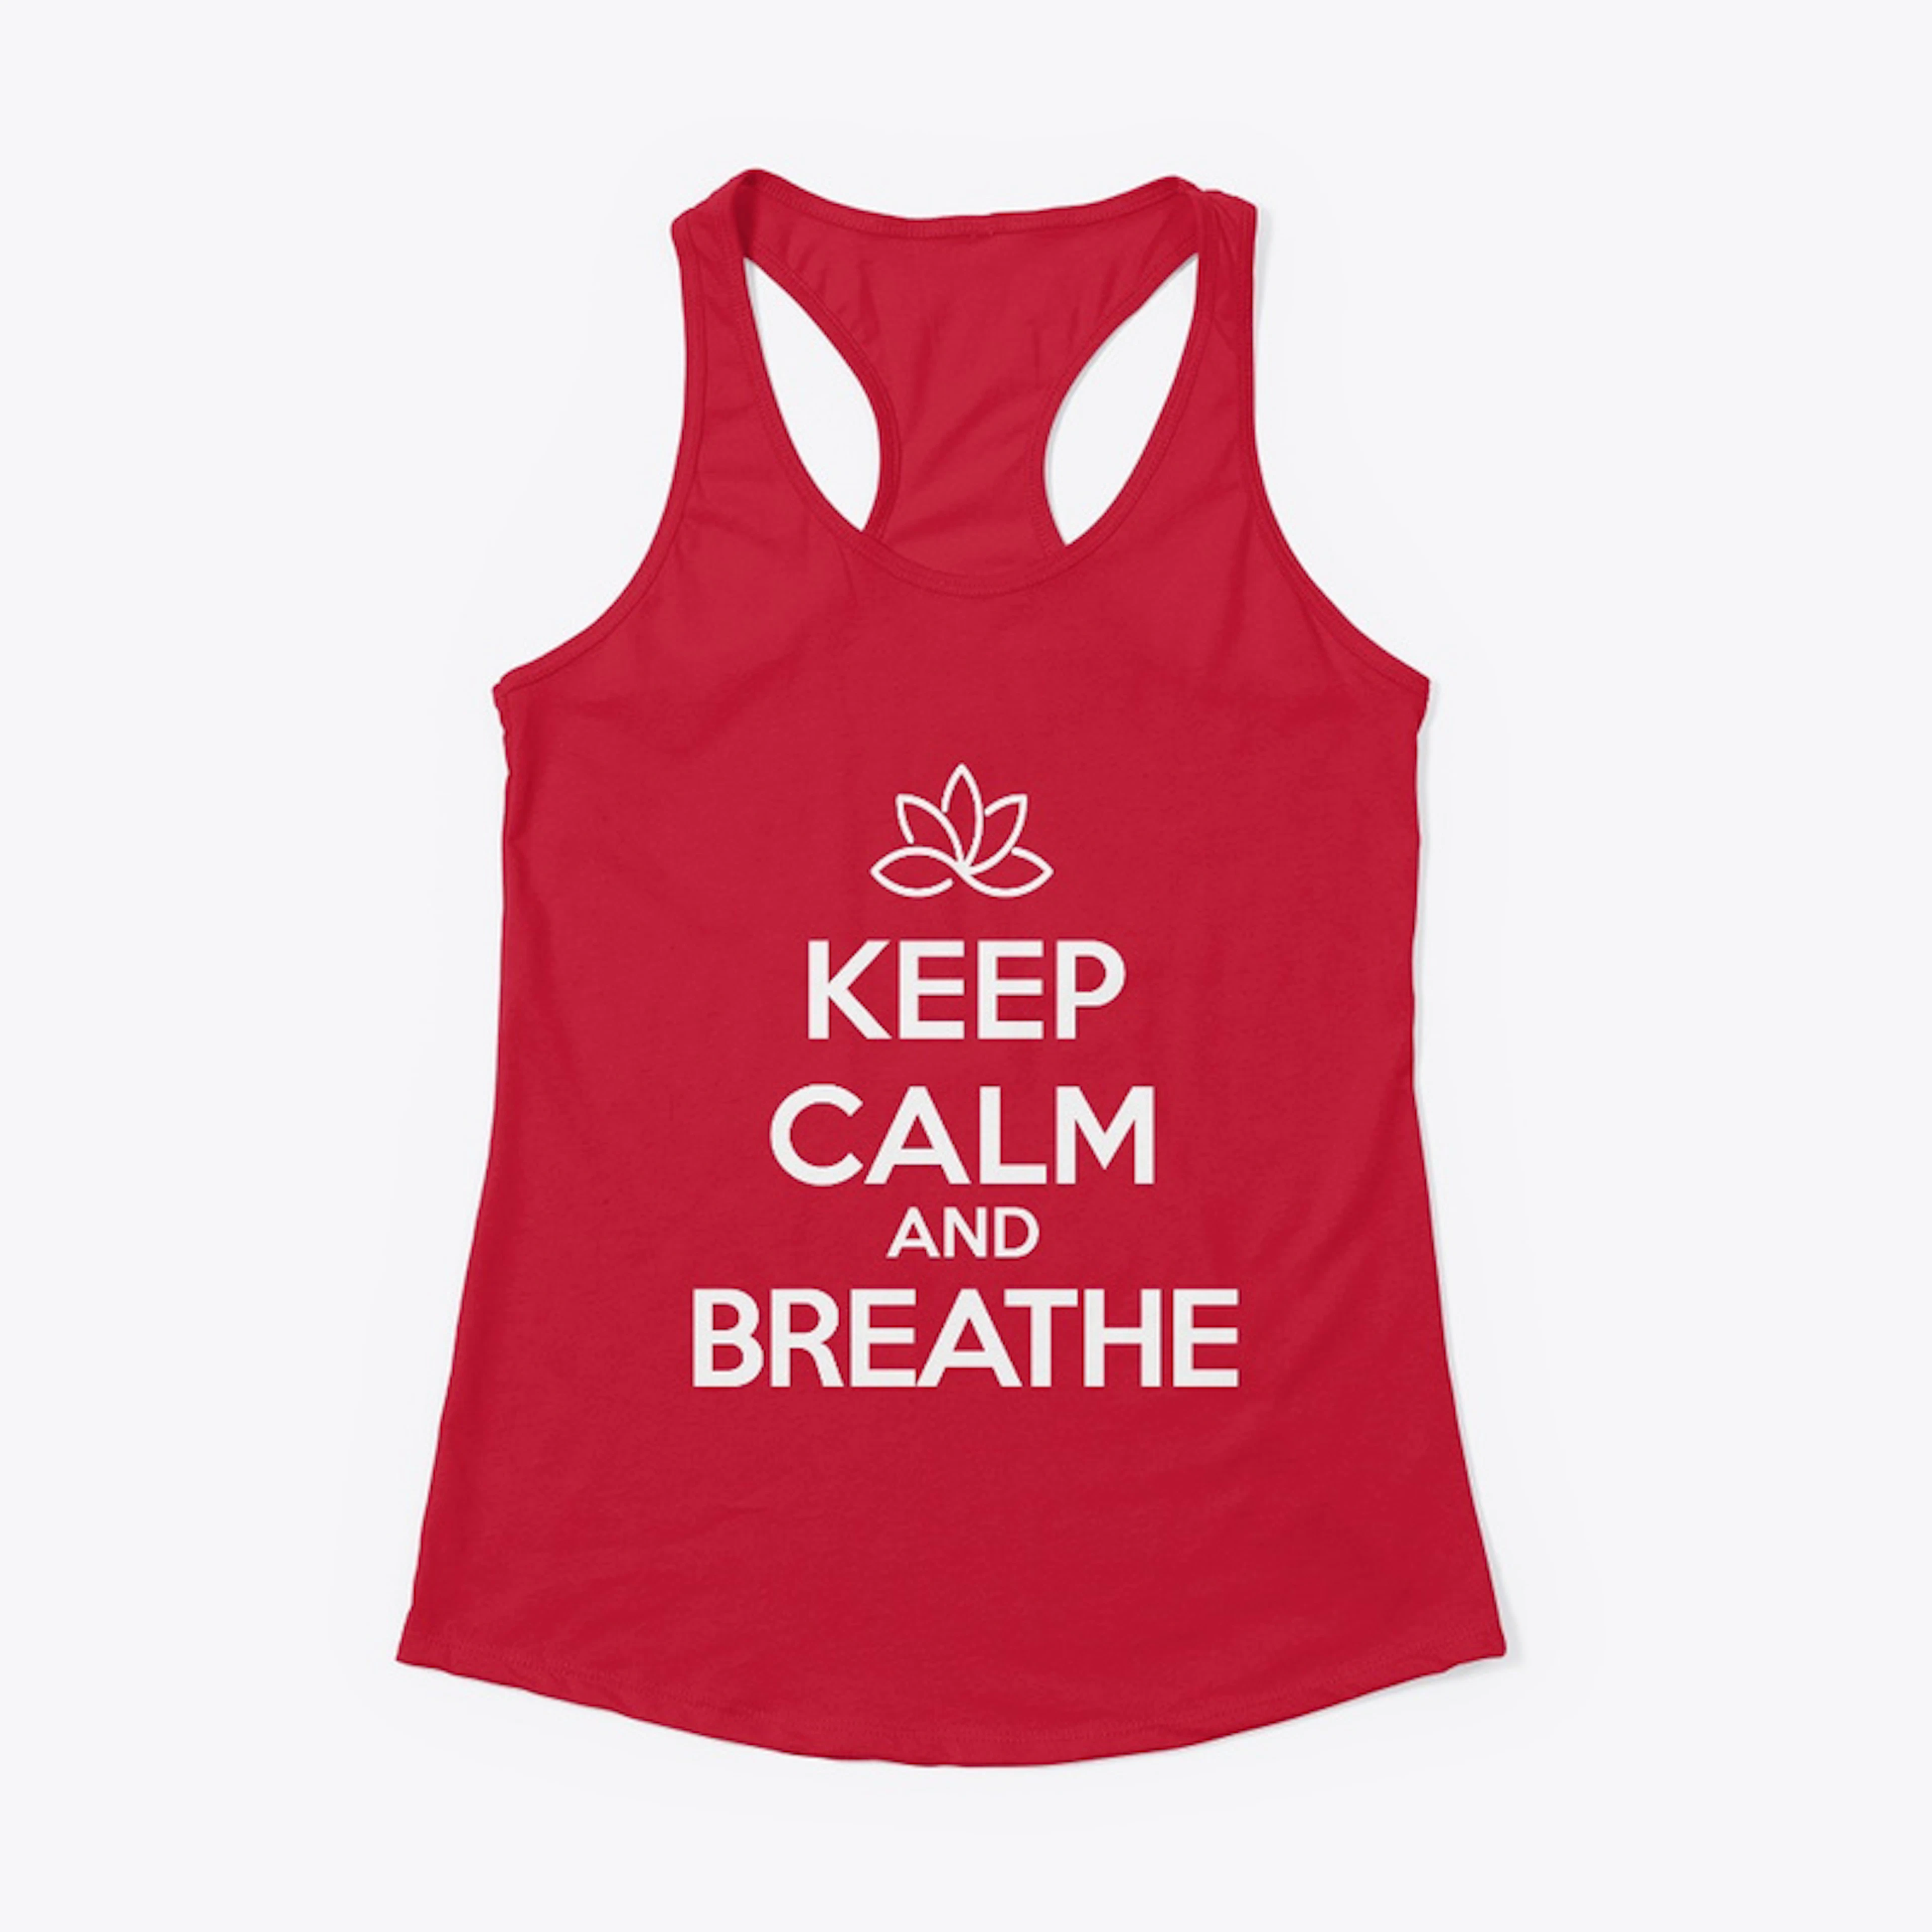 Keep Calm and Breathe